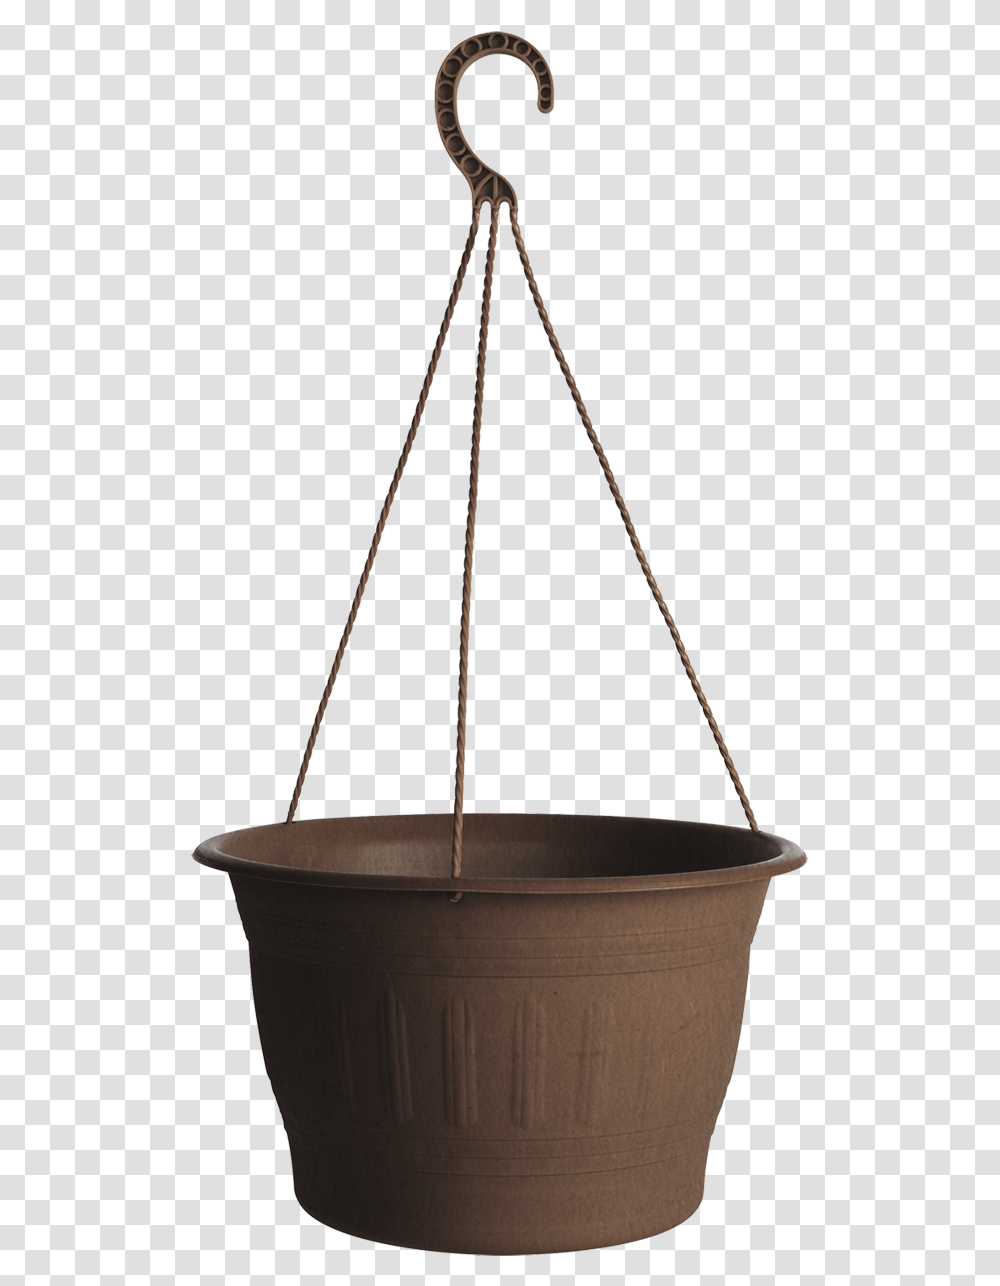 Colonnade Hanging Basket In Dark Earth Boat, Bowl, Pot, Handbag, Accessories Transparent Png